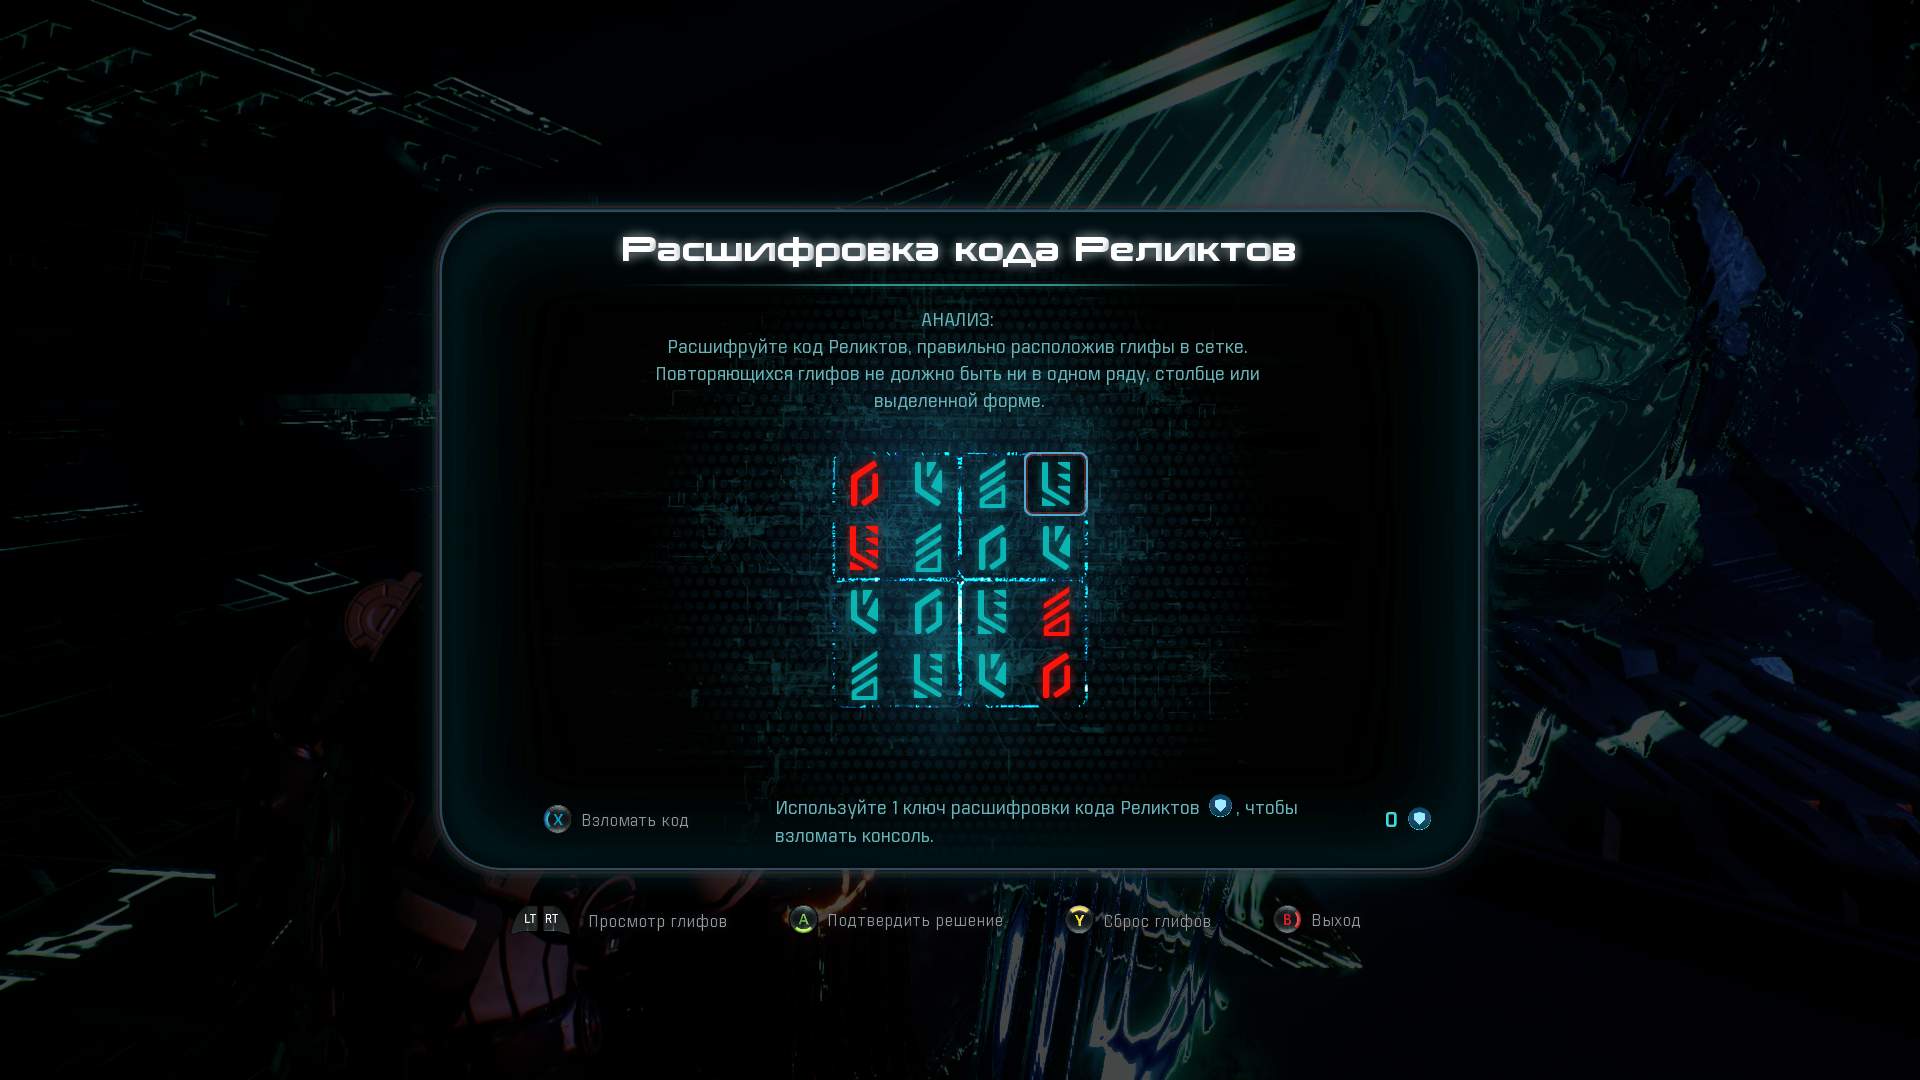 Реликты mass effect andromeda. Mass Effect Andromeda коды реликтов Воелд. Масс эффект Андромеда расшифровка кода реликтов на Воелде. Консоль реликтов Mass Effect Andromeda Воелд. Расшифровка кода реликтов Mass Effect Andromeda.